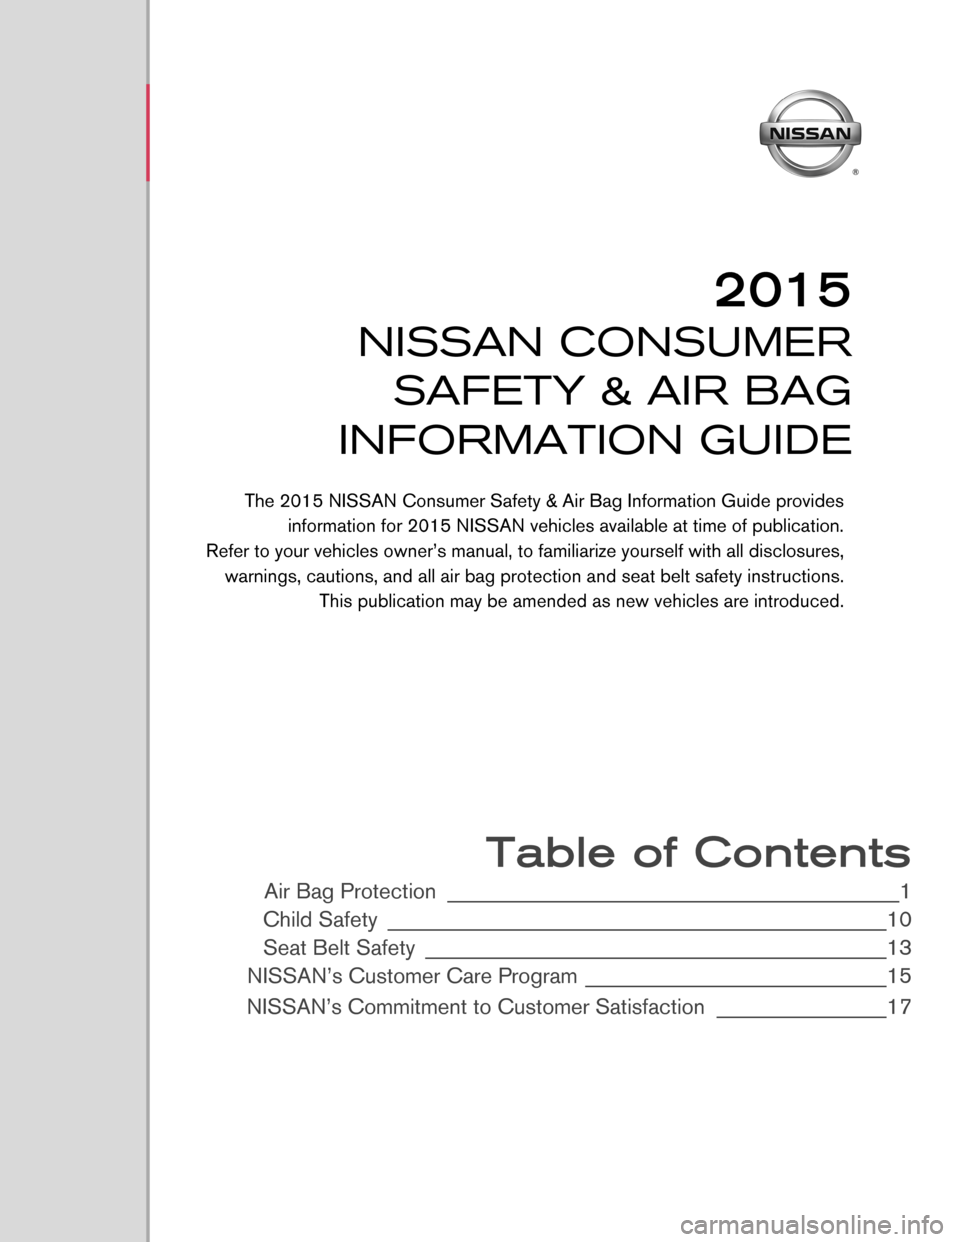 NISSAN VERSA SEDAN 2015 2.G Consumer Safety Air Bag Information Guide 